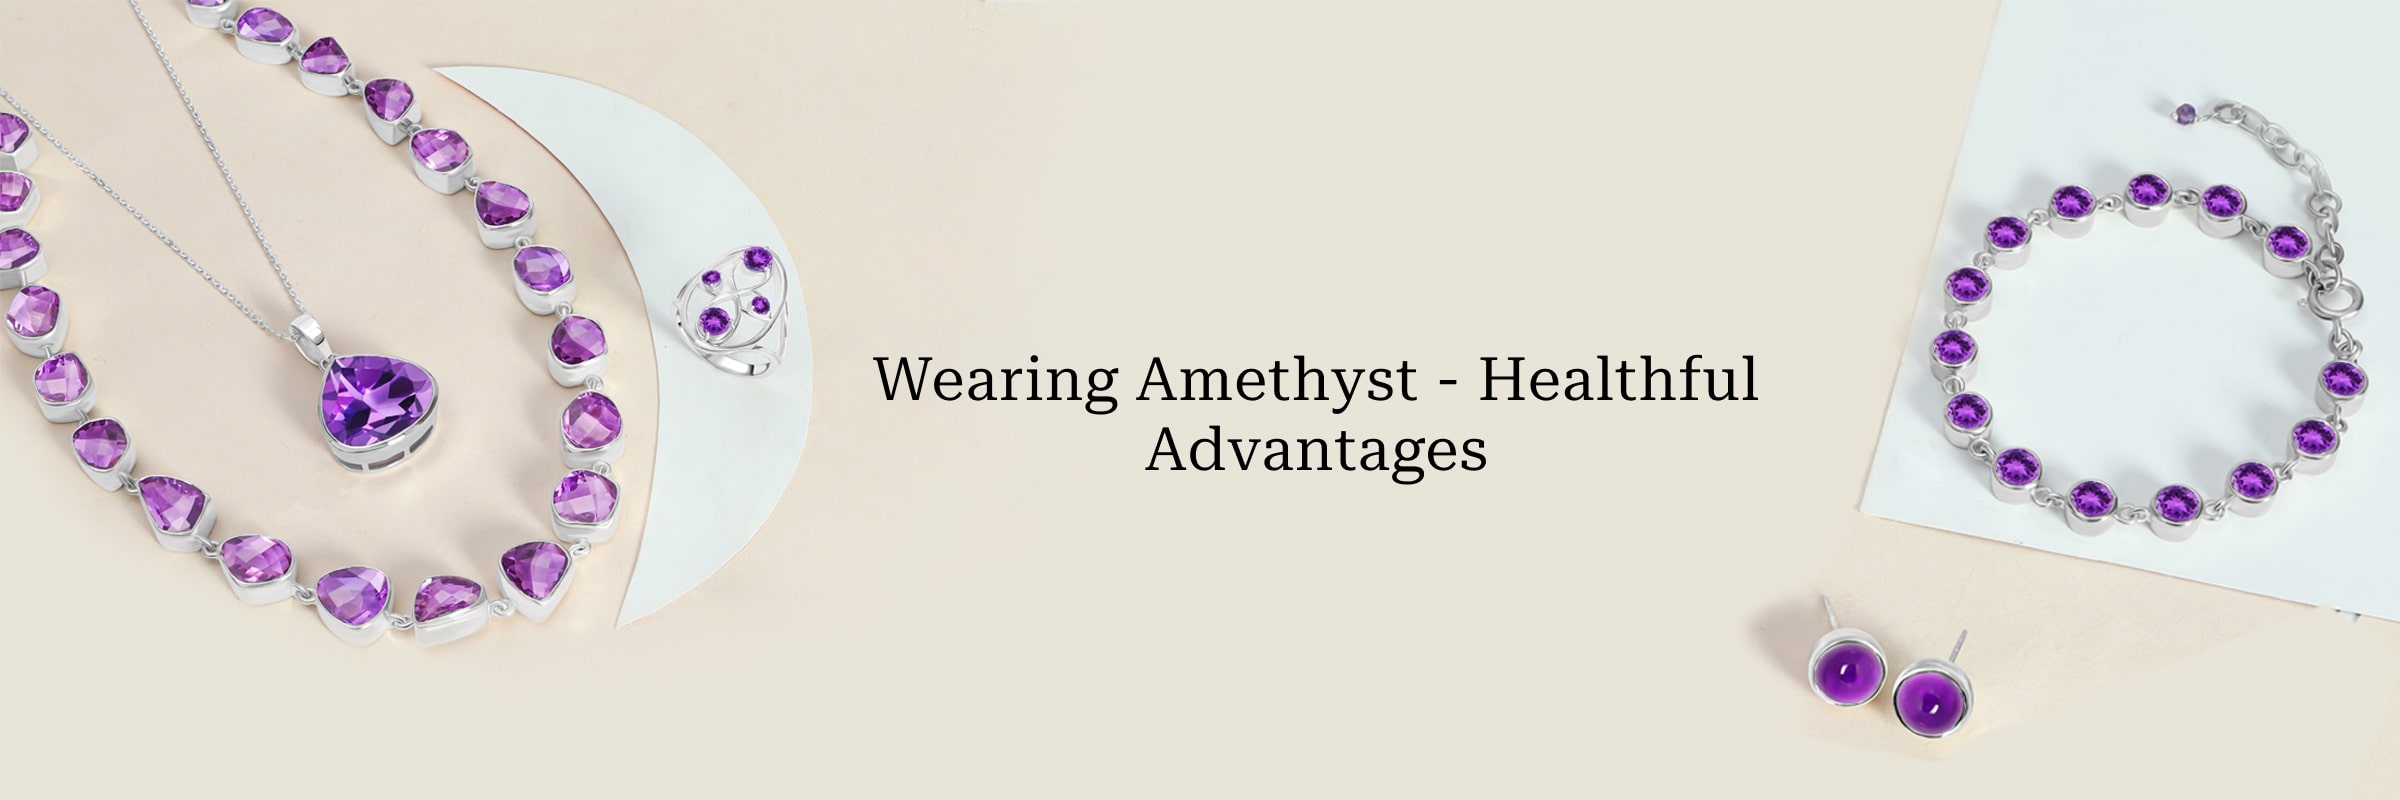 Benefits Of Wearing Amethyst